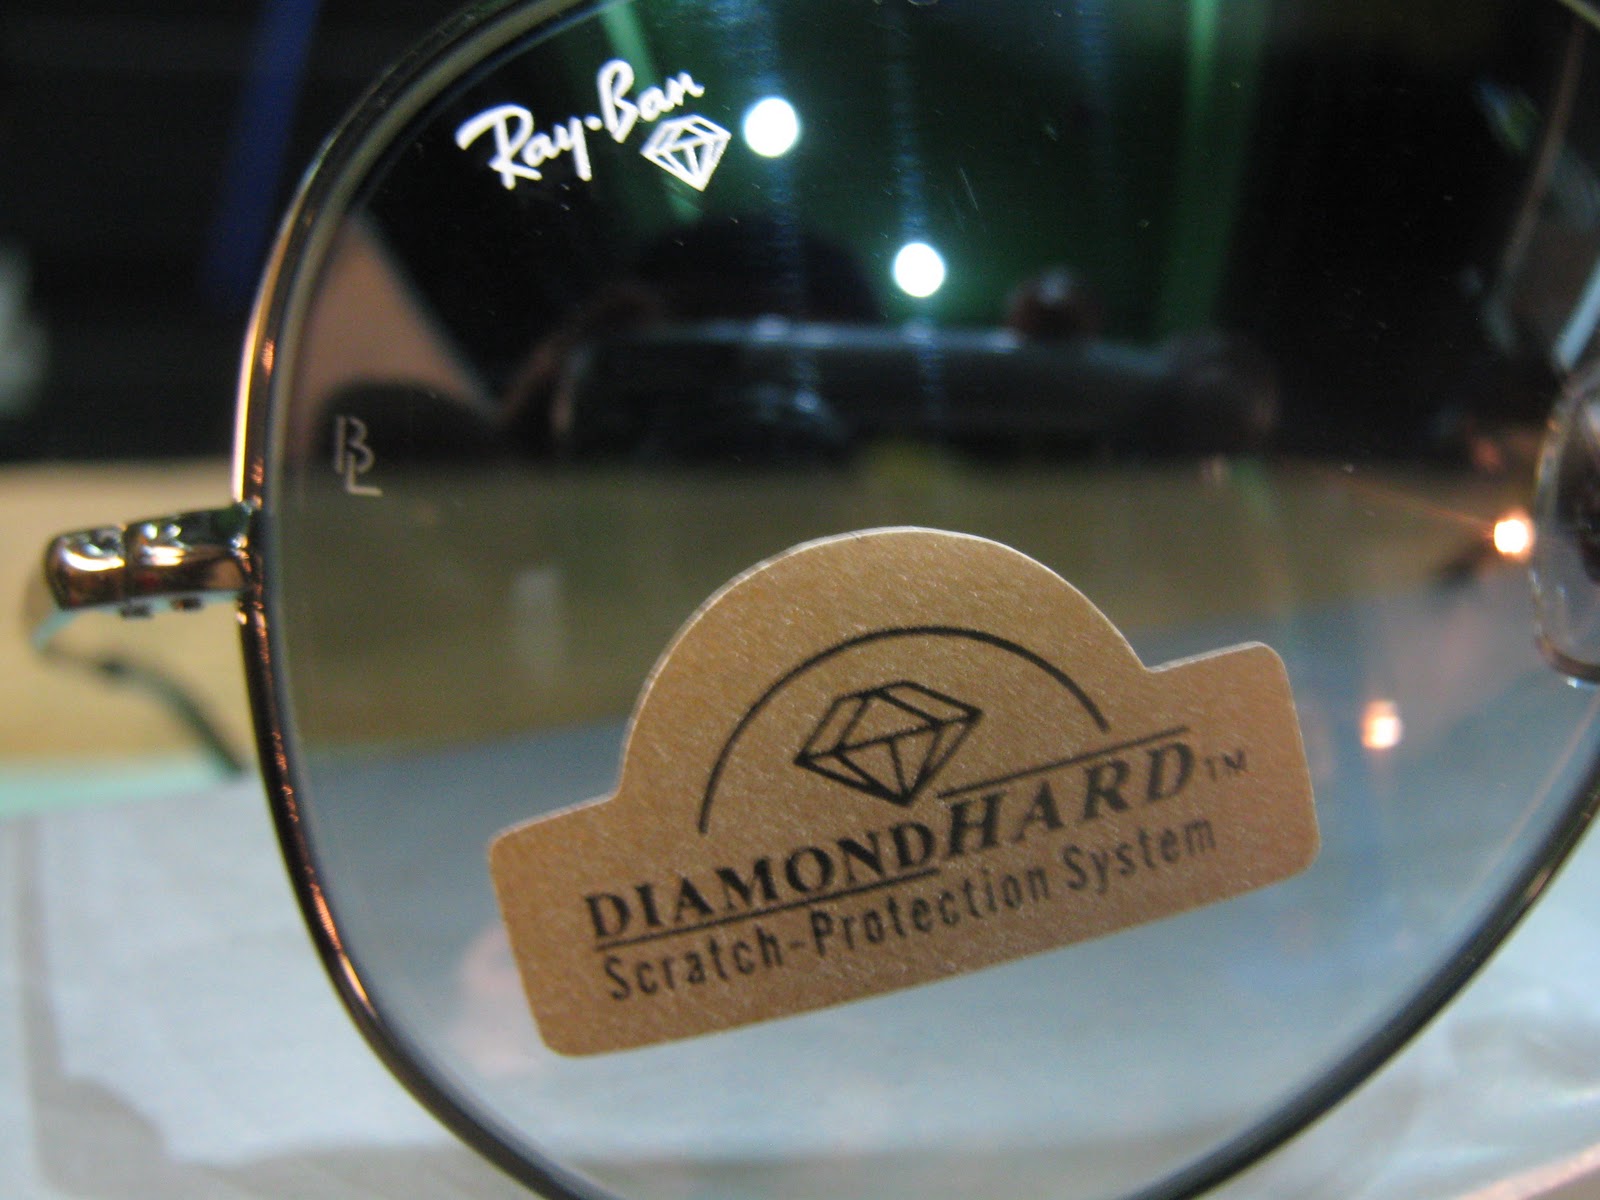 ray ban aviator with diamond logo